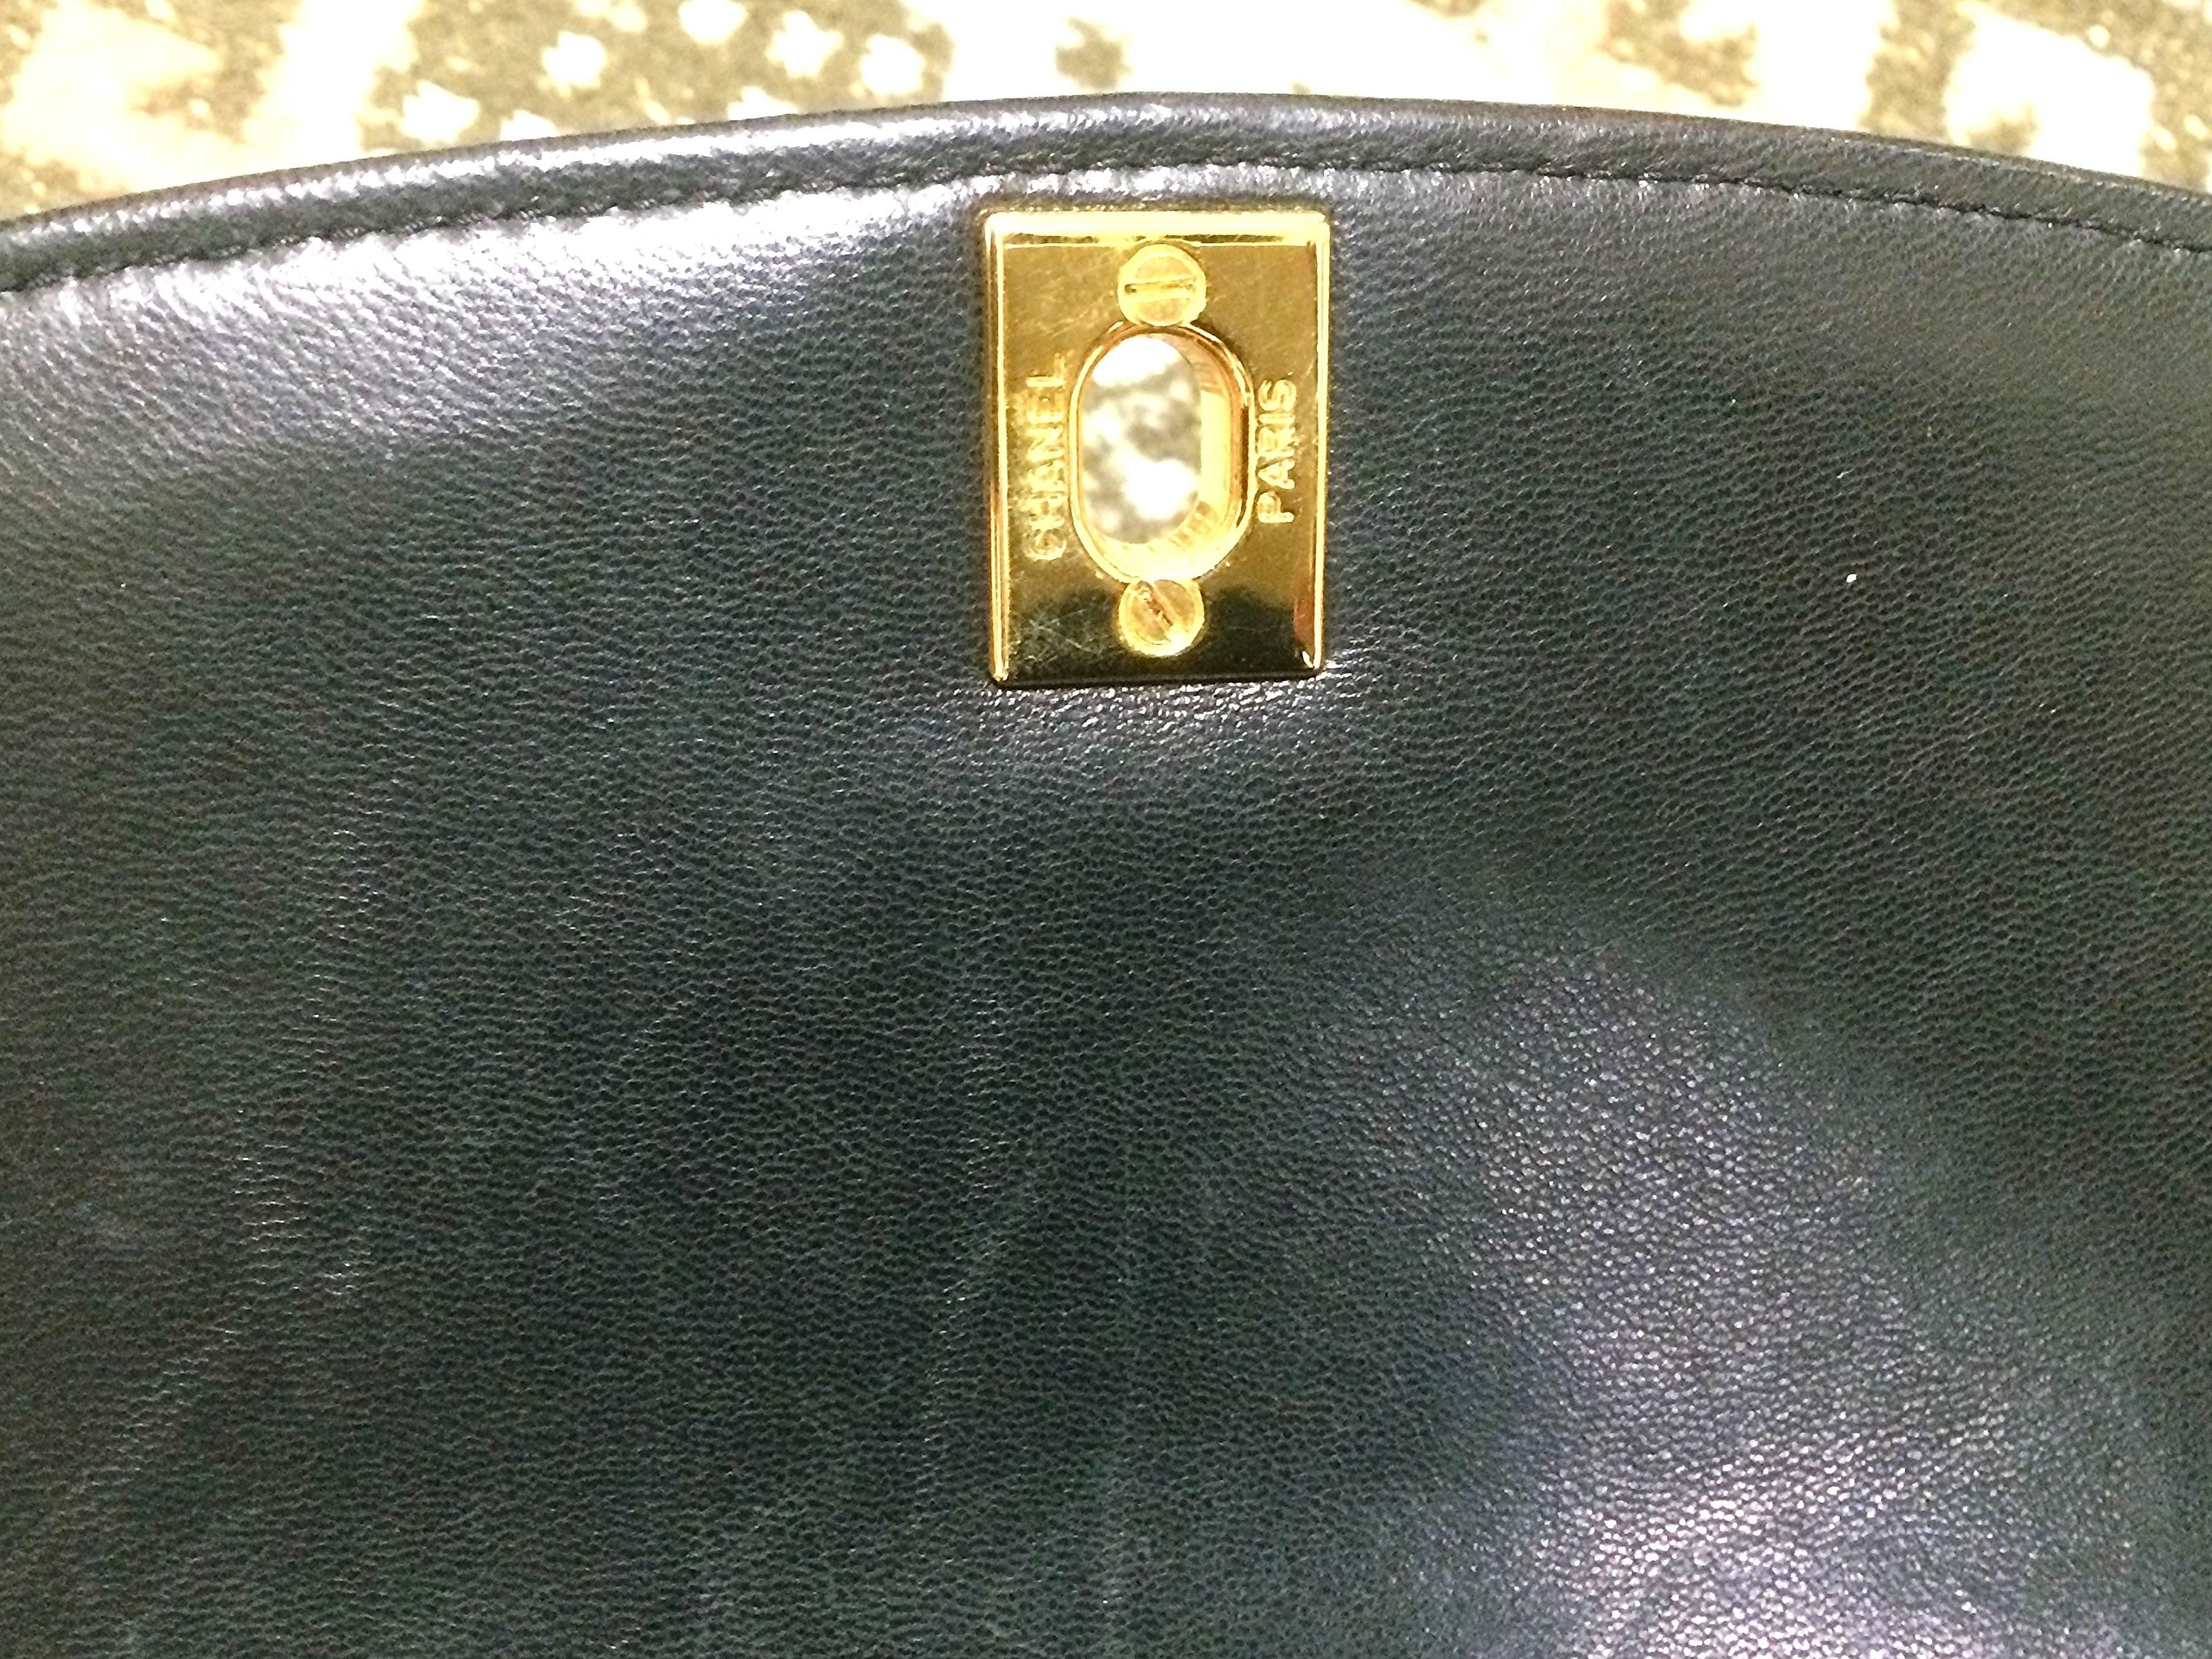 MINT. Vintage CHANEL black lambskin classic flap 2.55 gold chain shoulder bag. 3